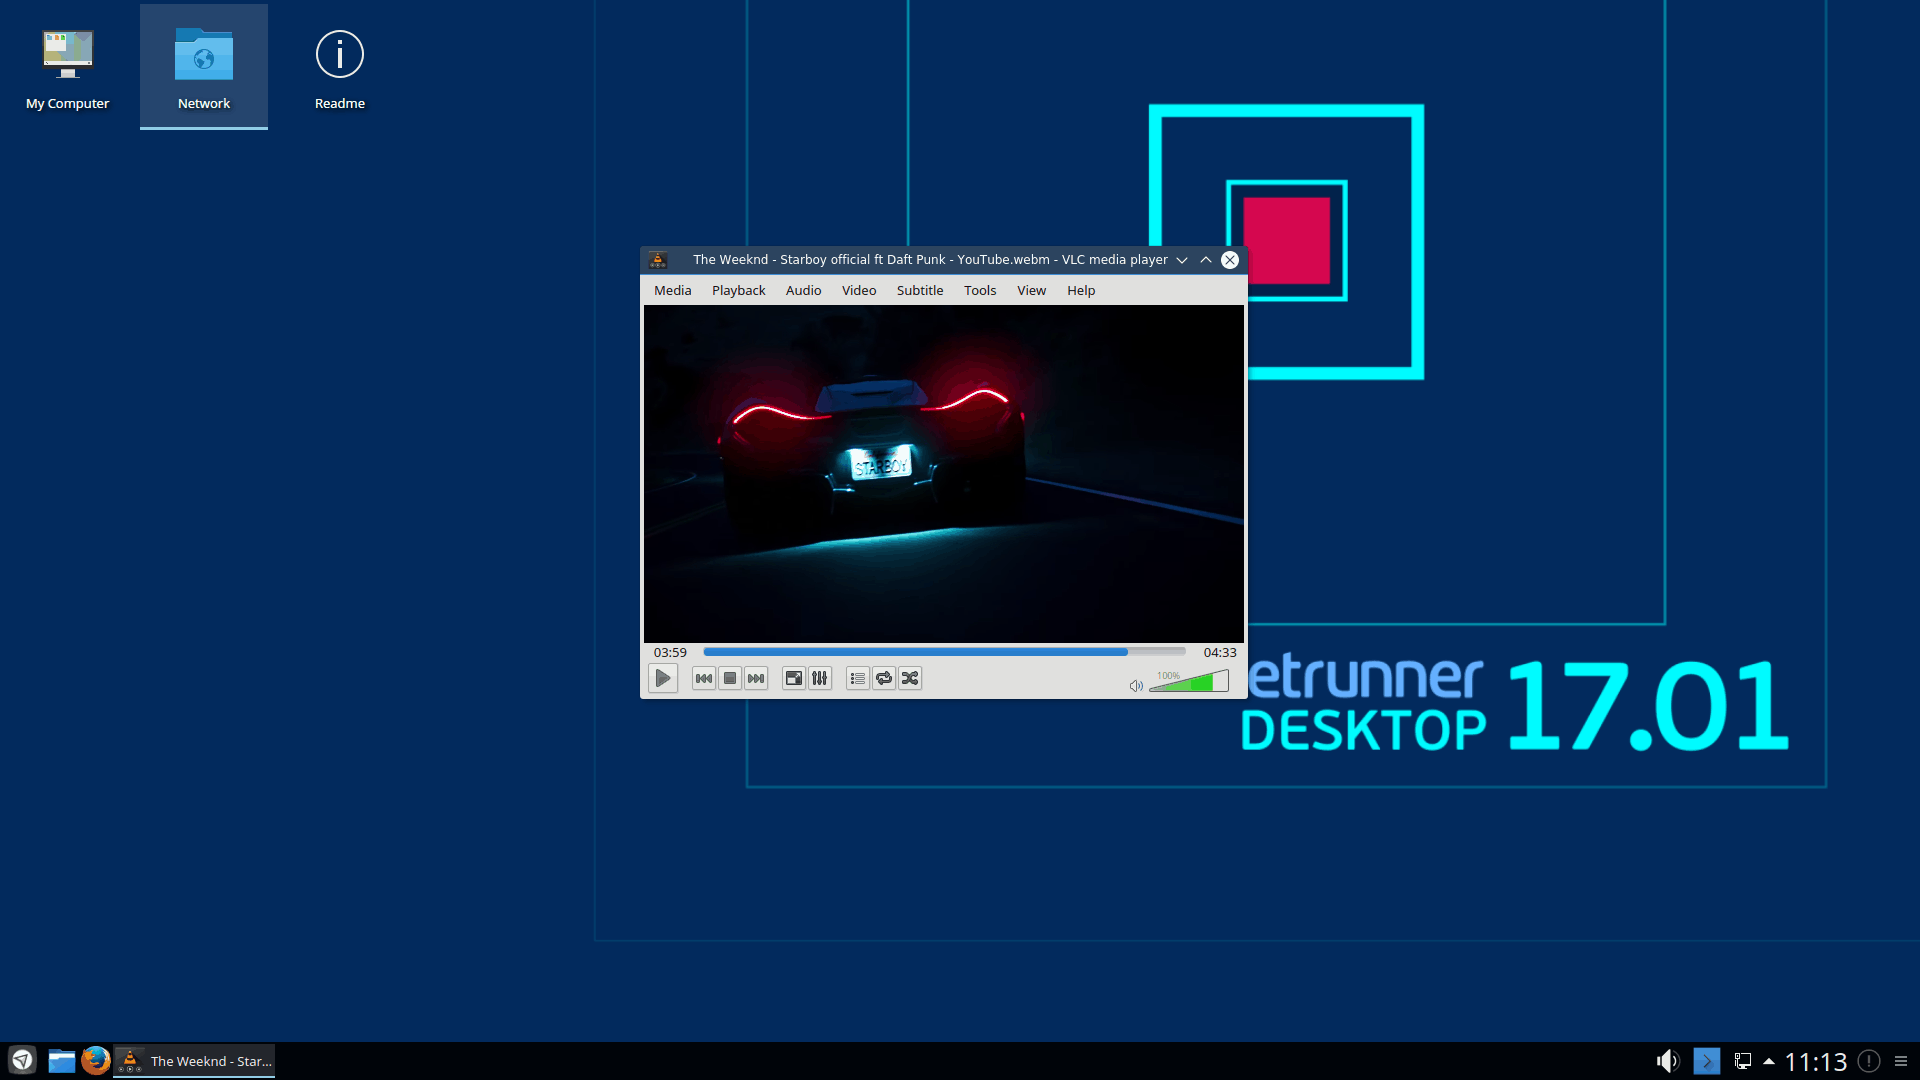  Netrunner 17.01 Desktop Debian-based with Plasma 5.8.2